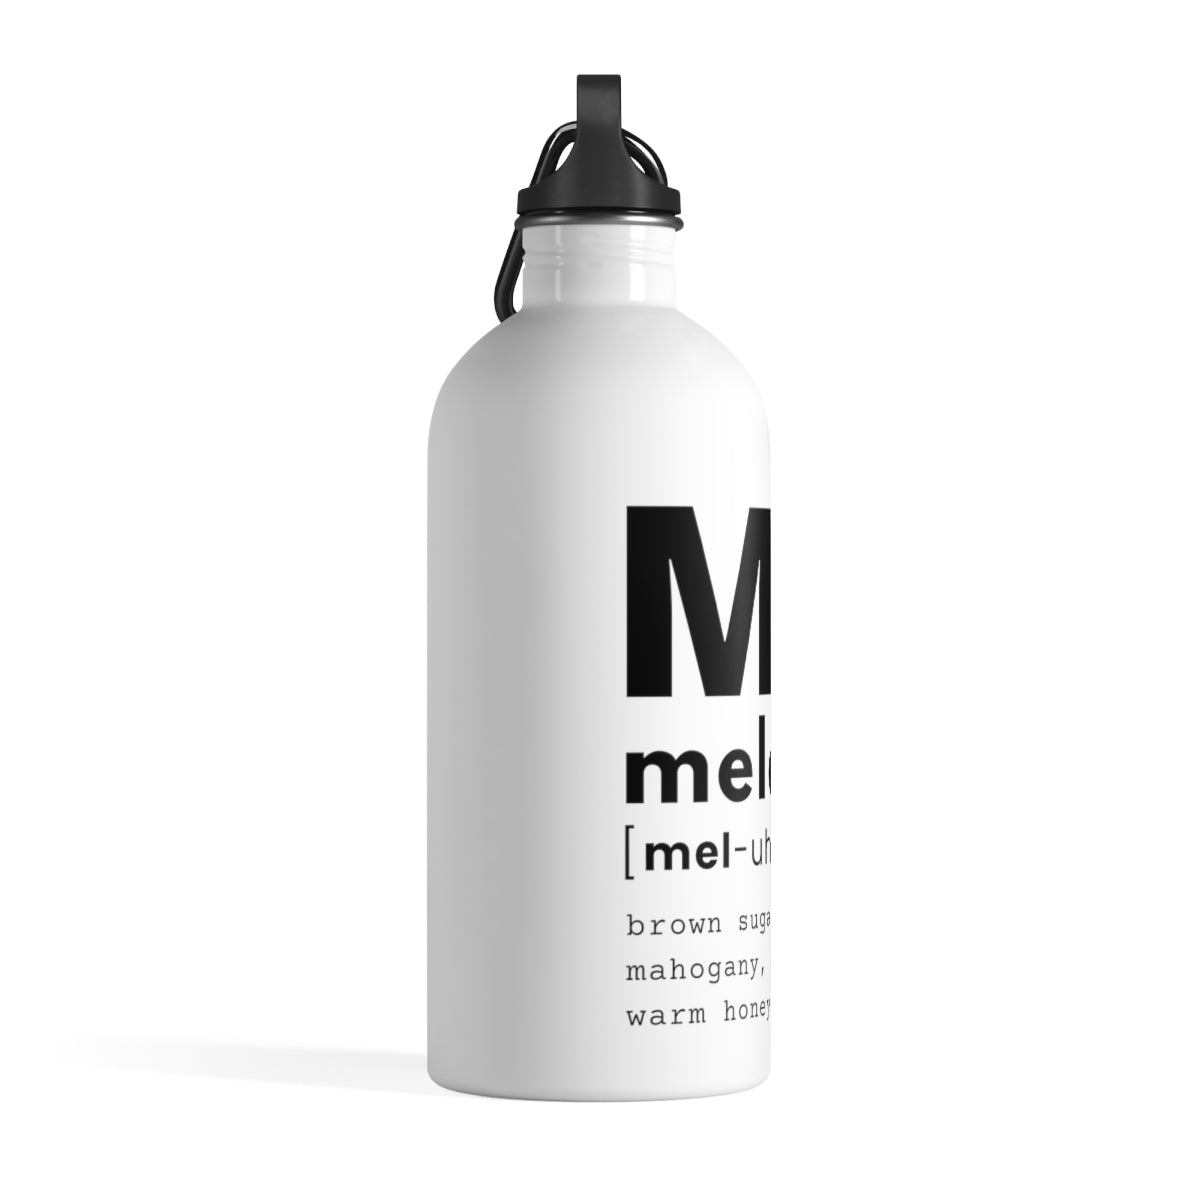 "melanin" Stainless Steel Water Bottle